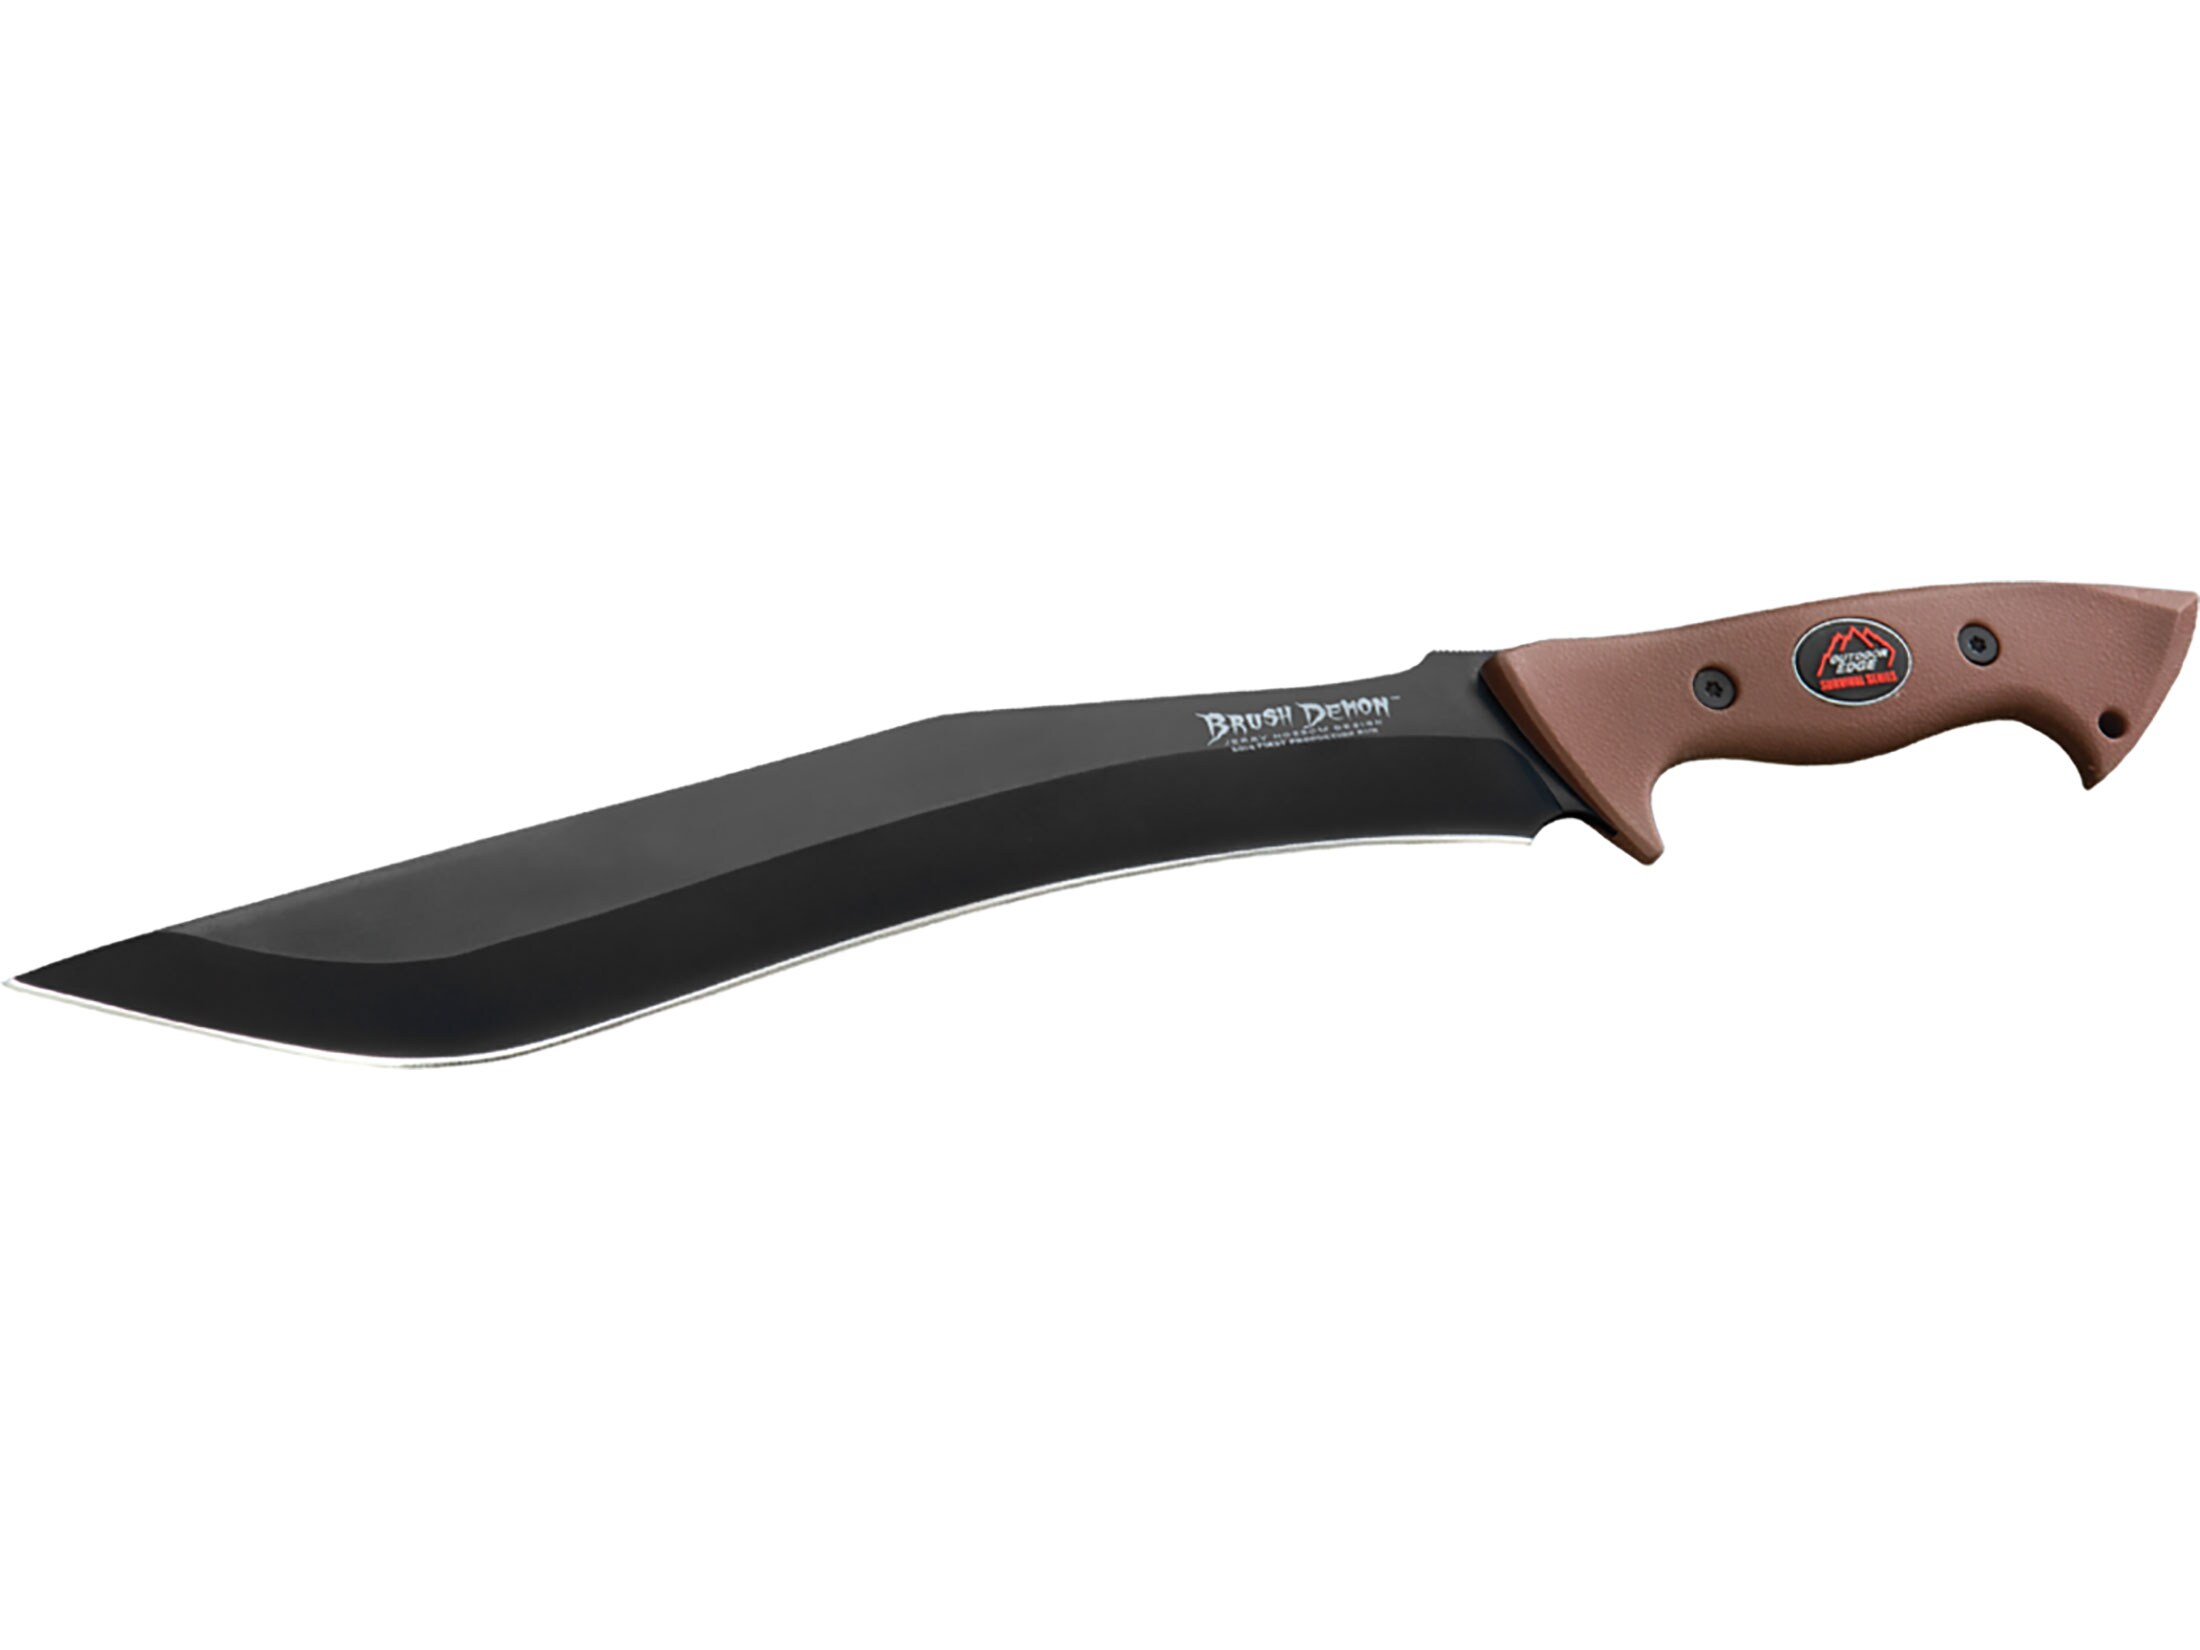 https://cityarsenal.com/product/outdoor-edge-bush-demon-survival-machete-13-5in-black-blade-with-nylon-sheath-bd-10c/